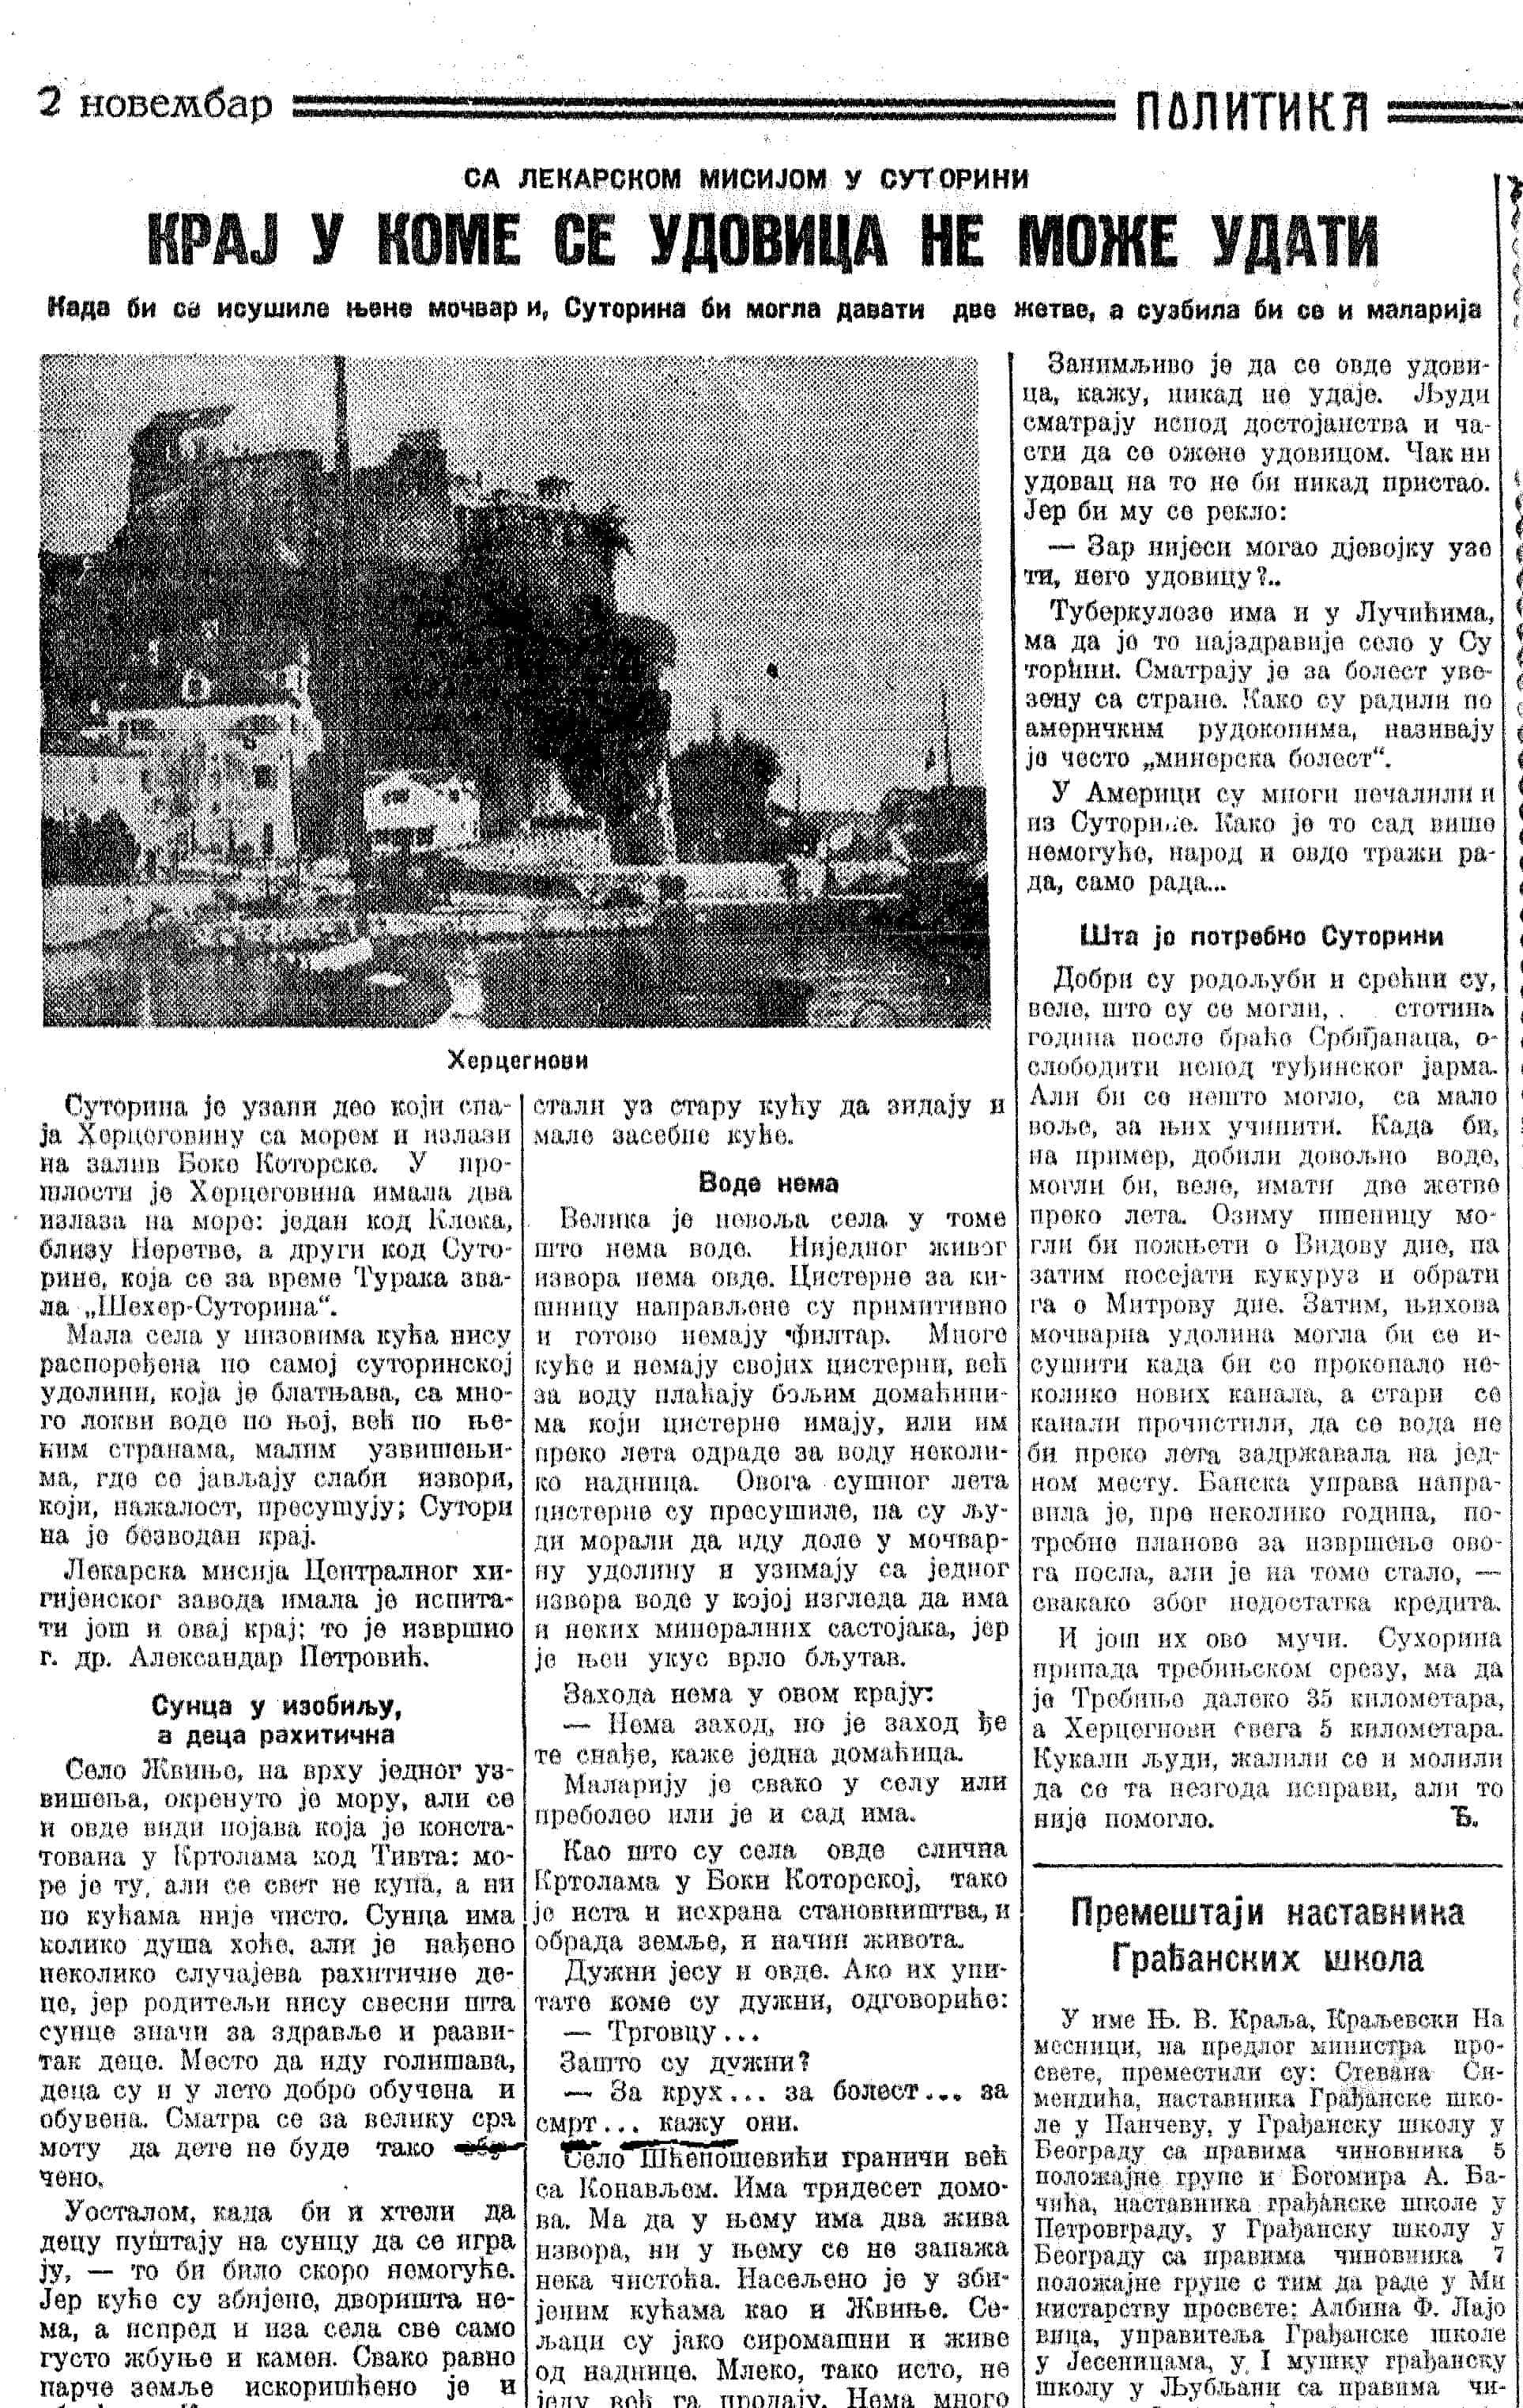 Otomanska zaostavština: Tekst iz "Politike" od 2. novembra 1935.